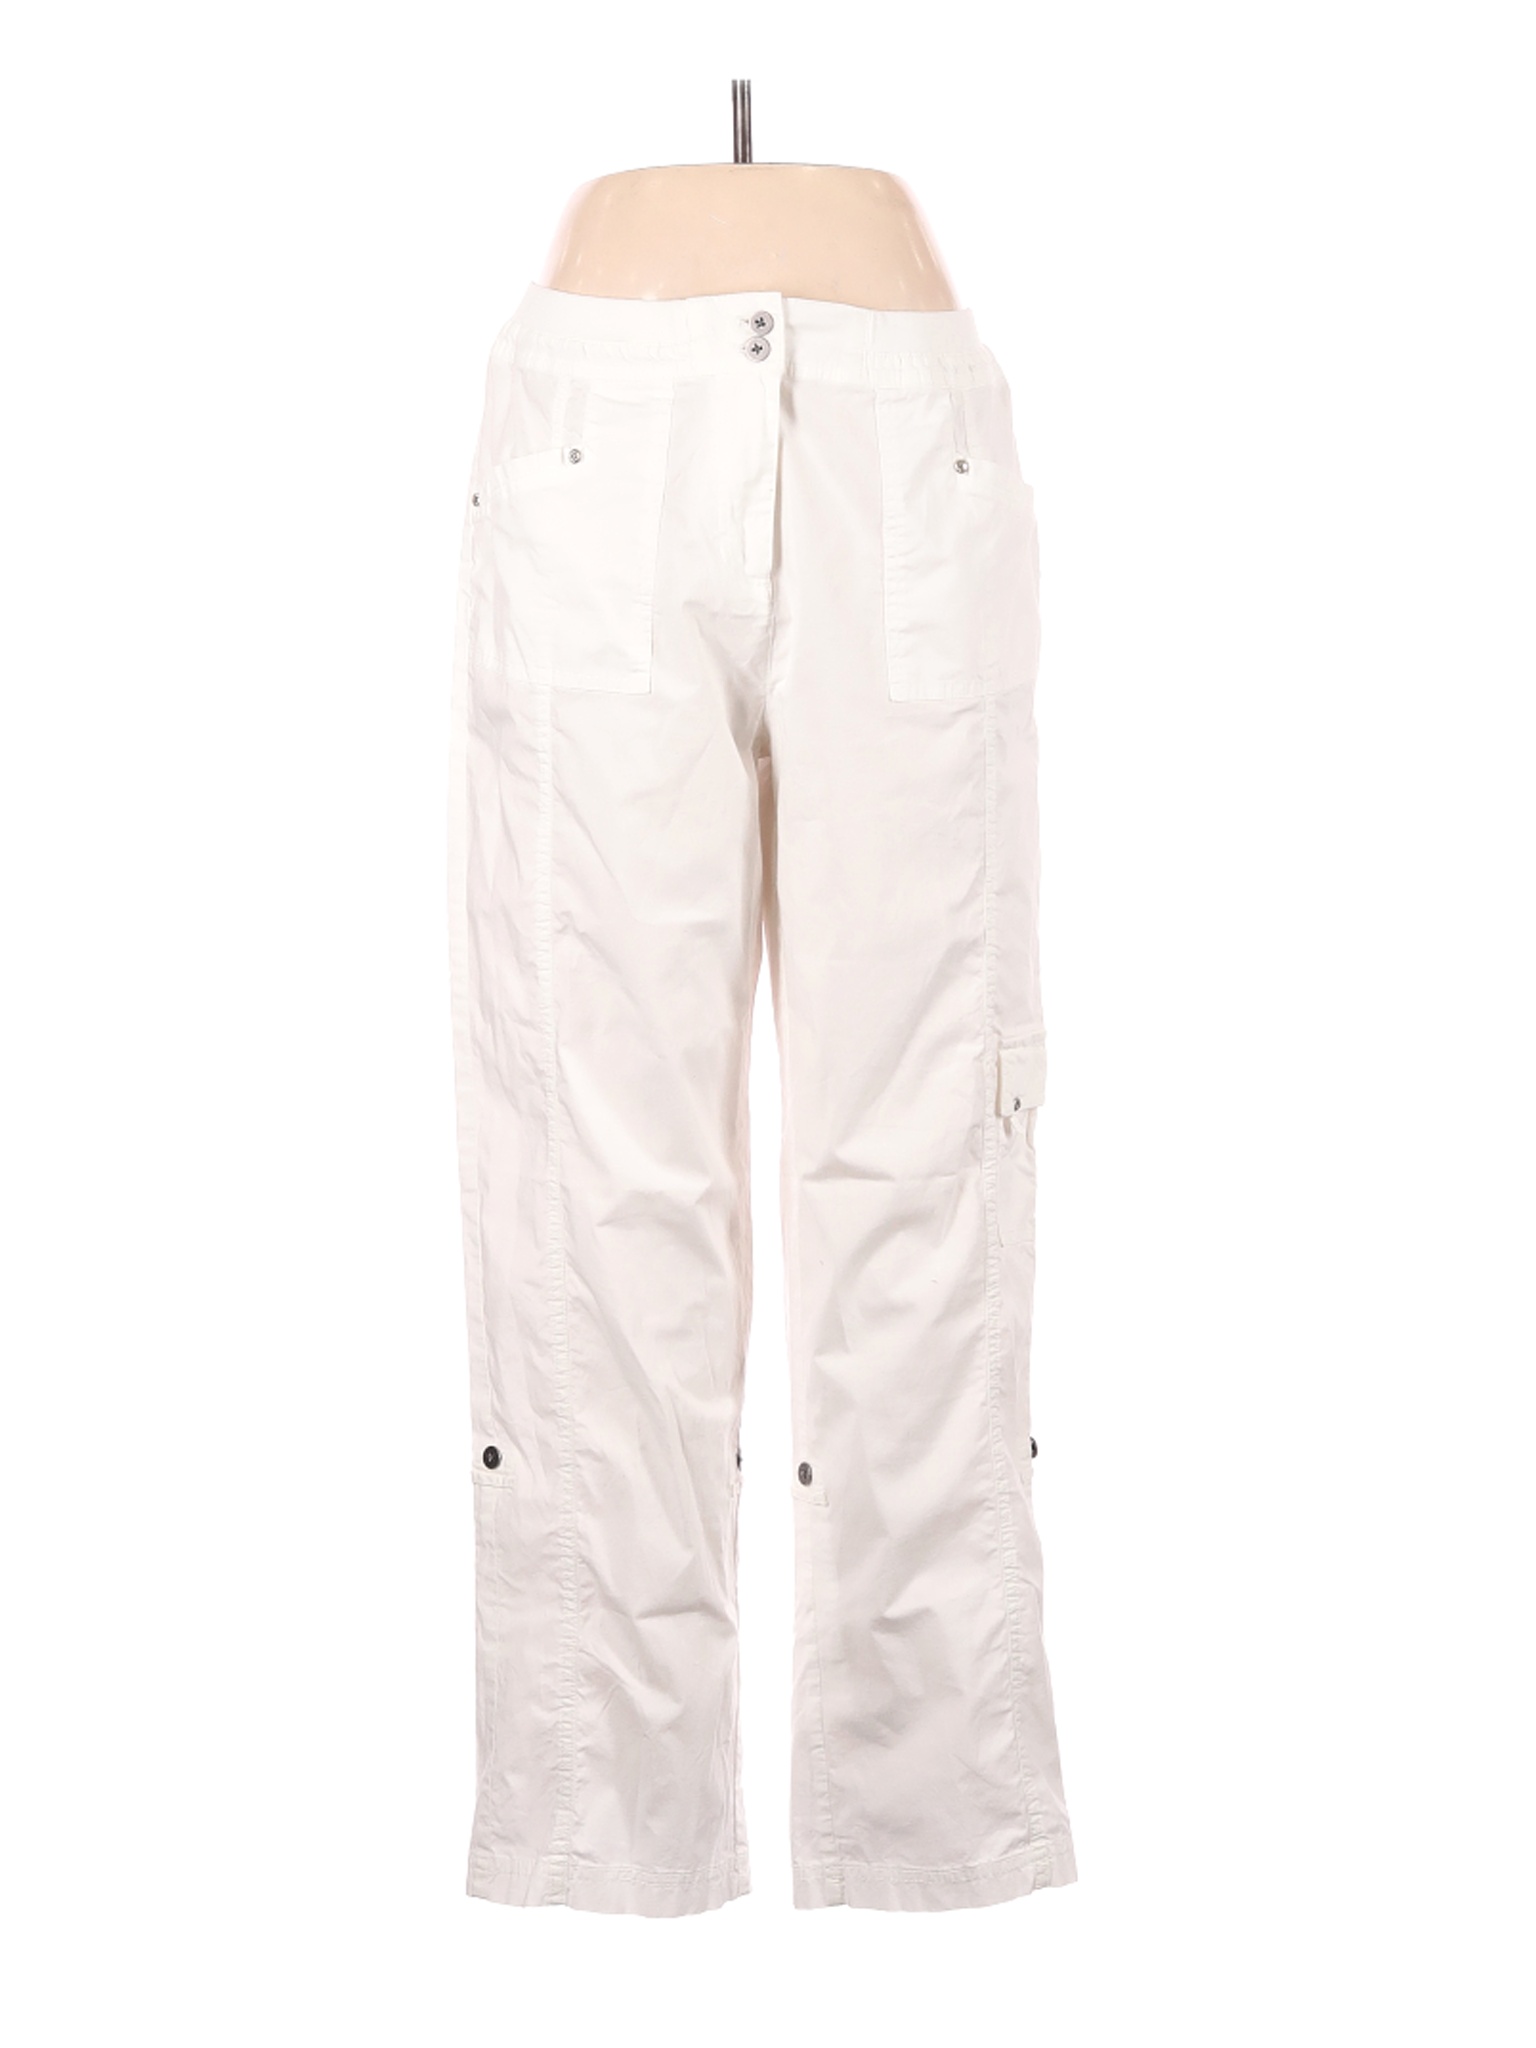 Laura Ashley Women White Cargo Pants 12 | eBay